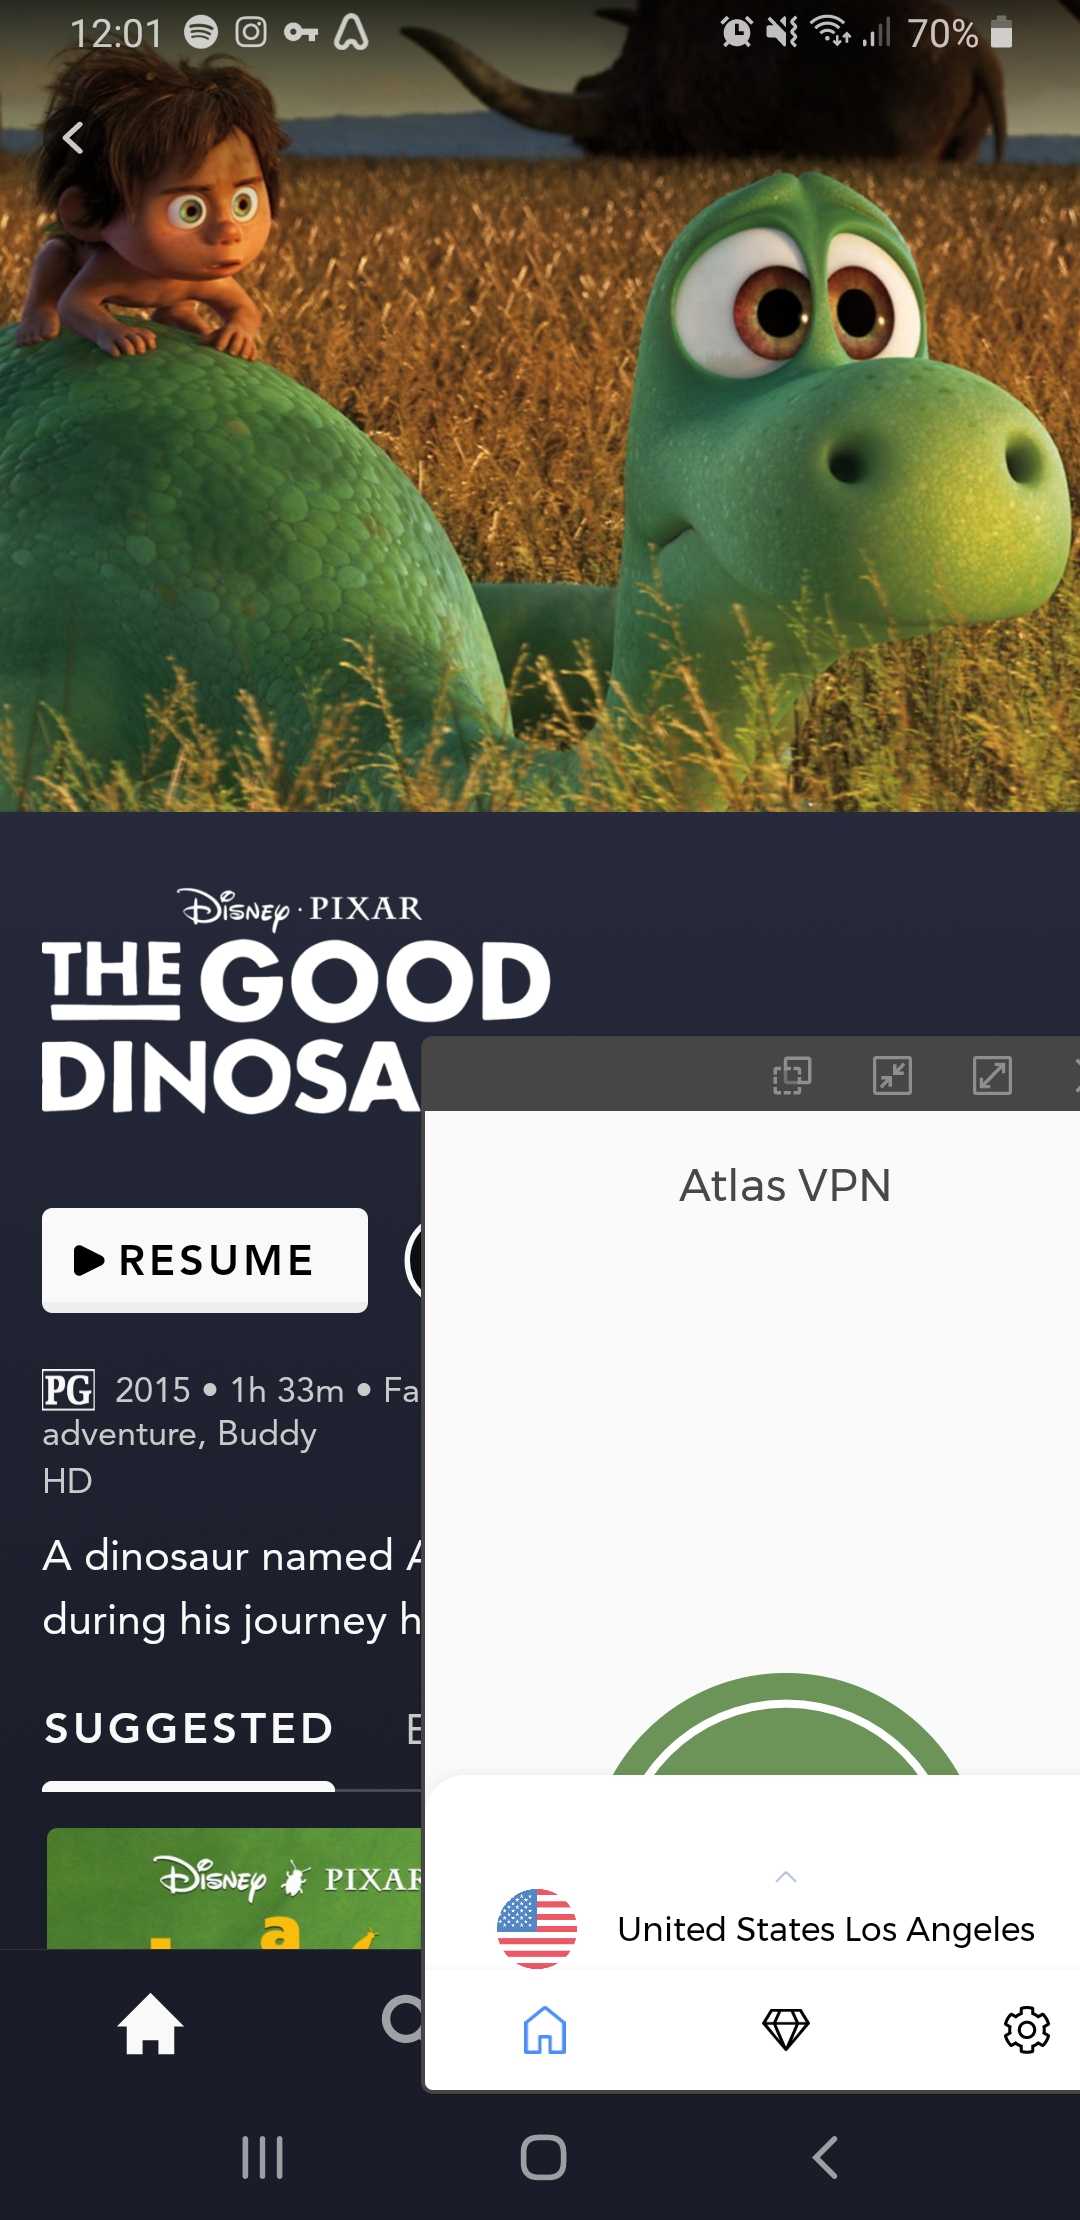 Disney+ Atlas VPN